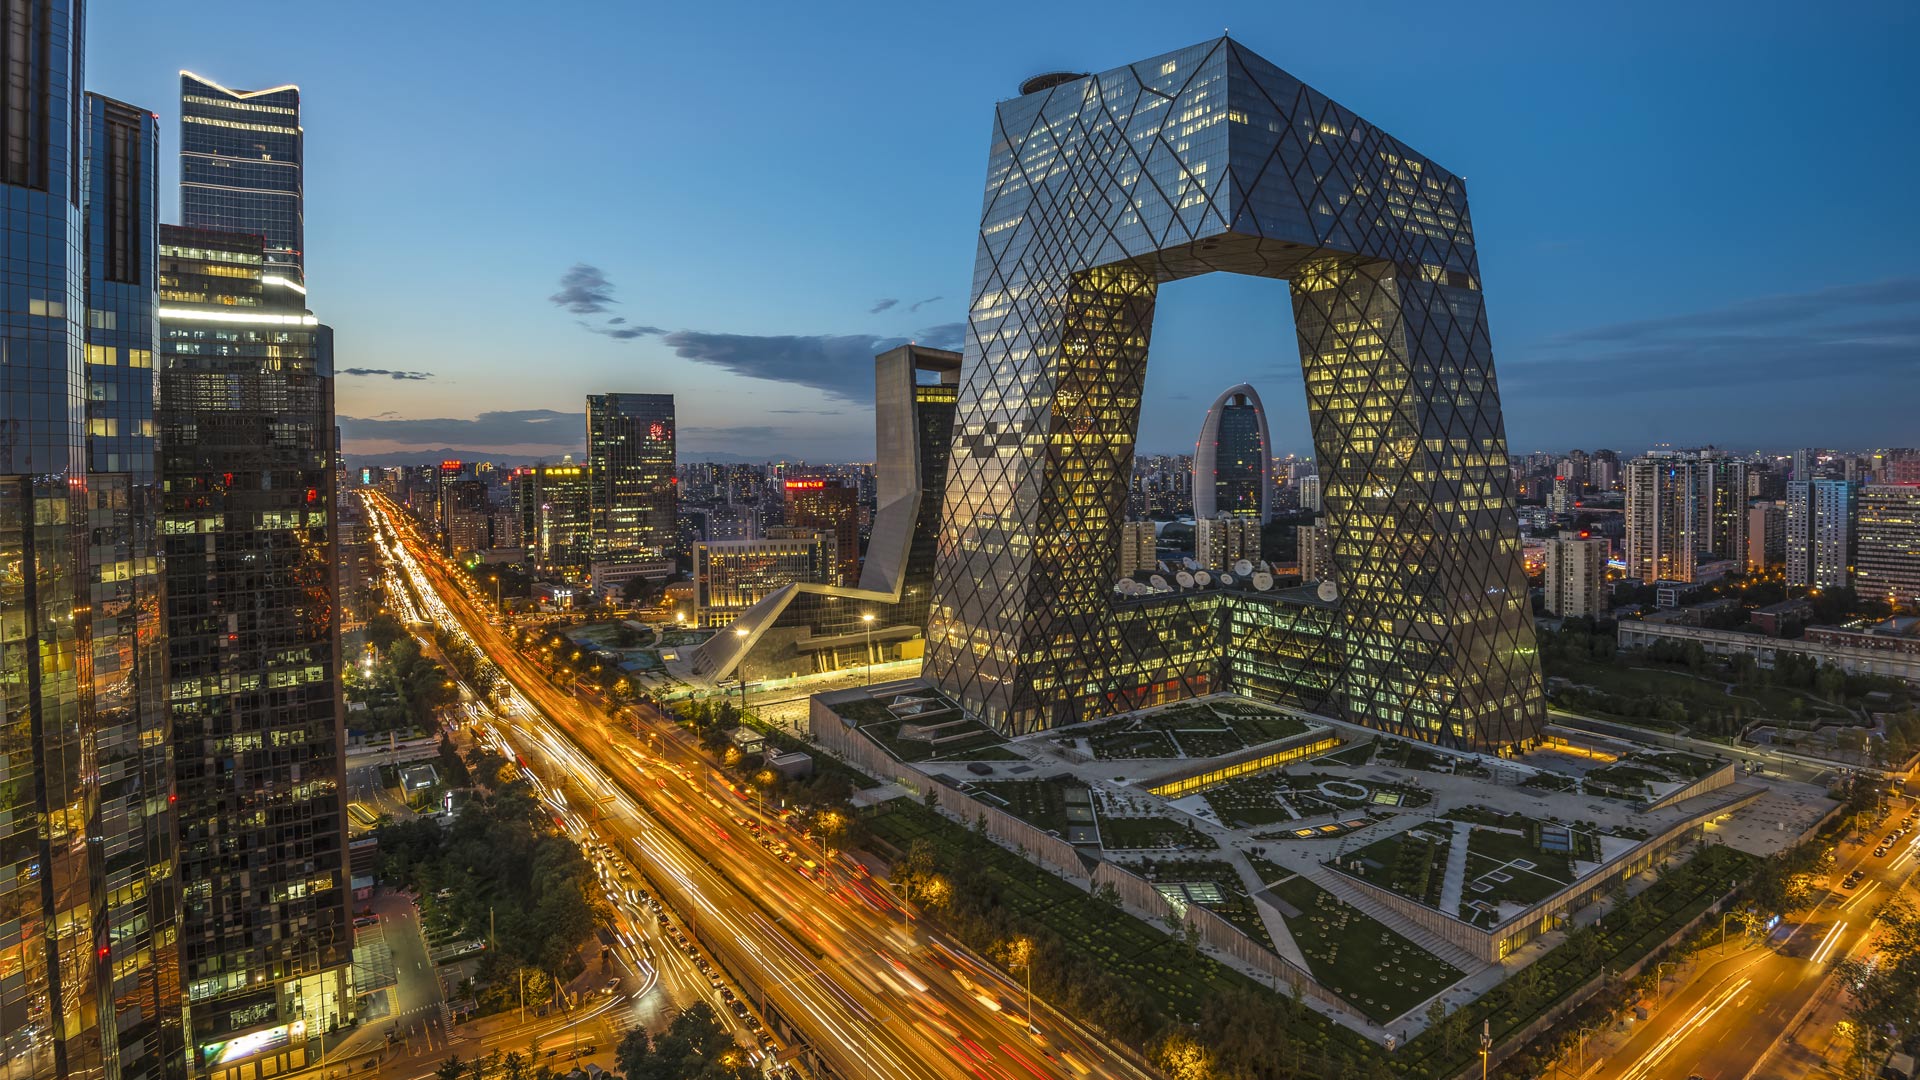 An image of Beijing China CBD at dusk